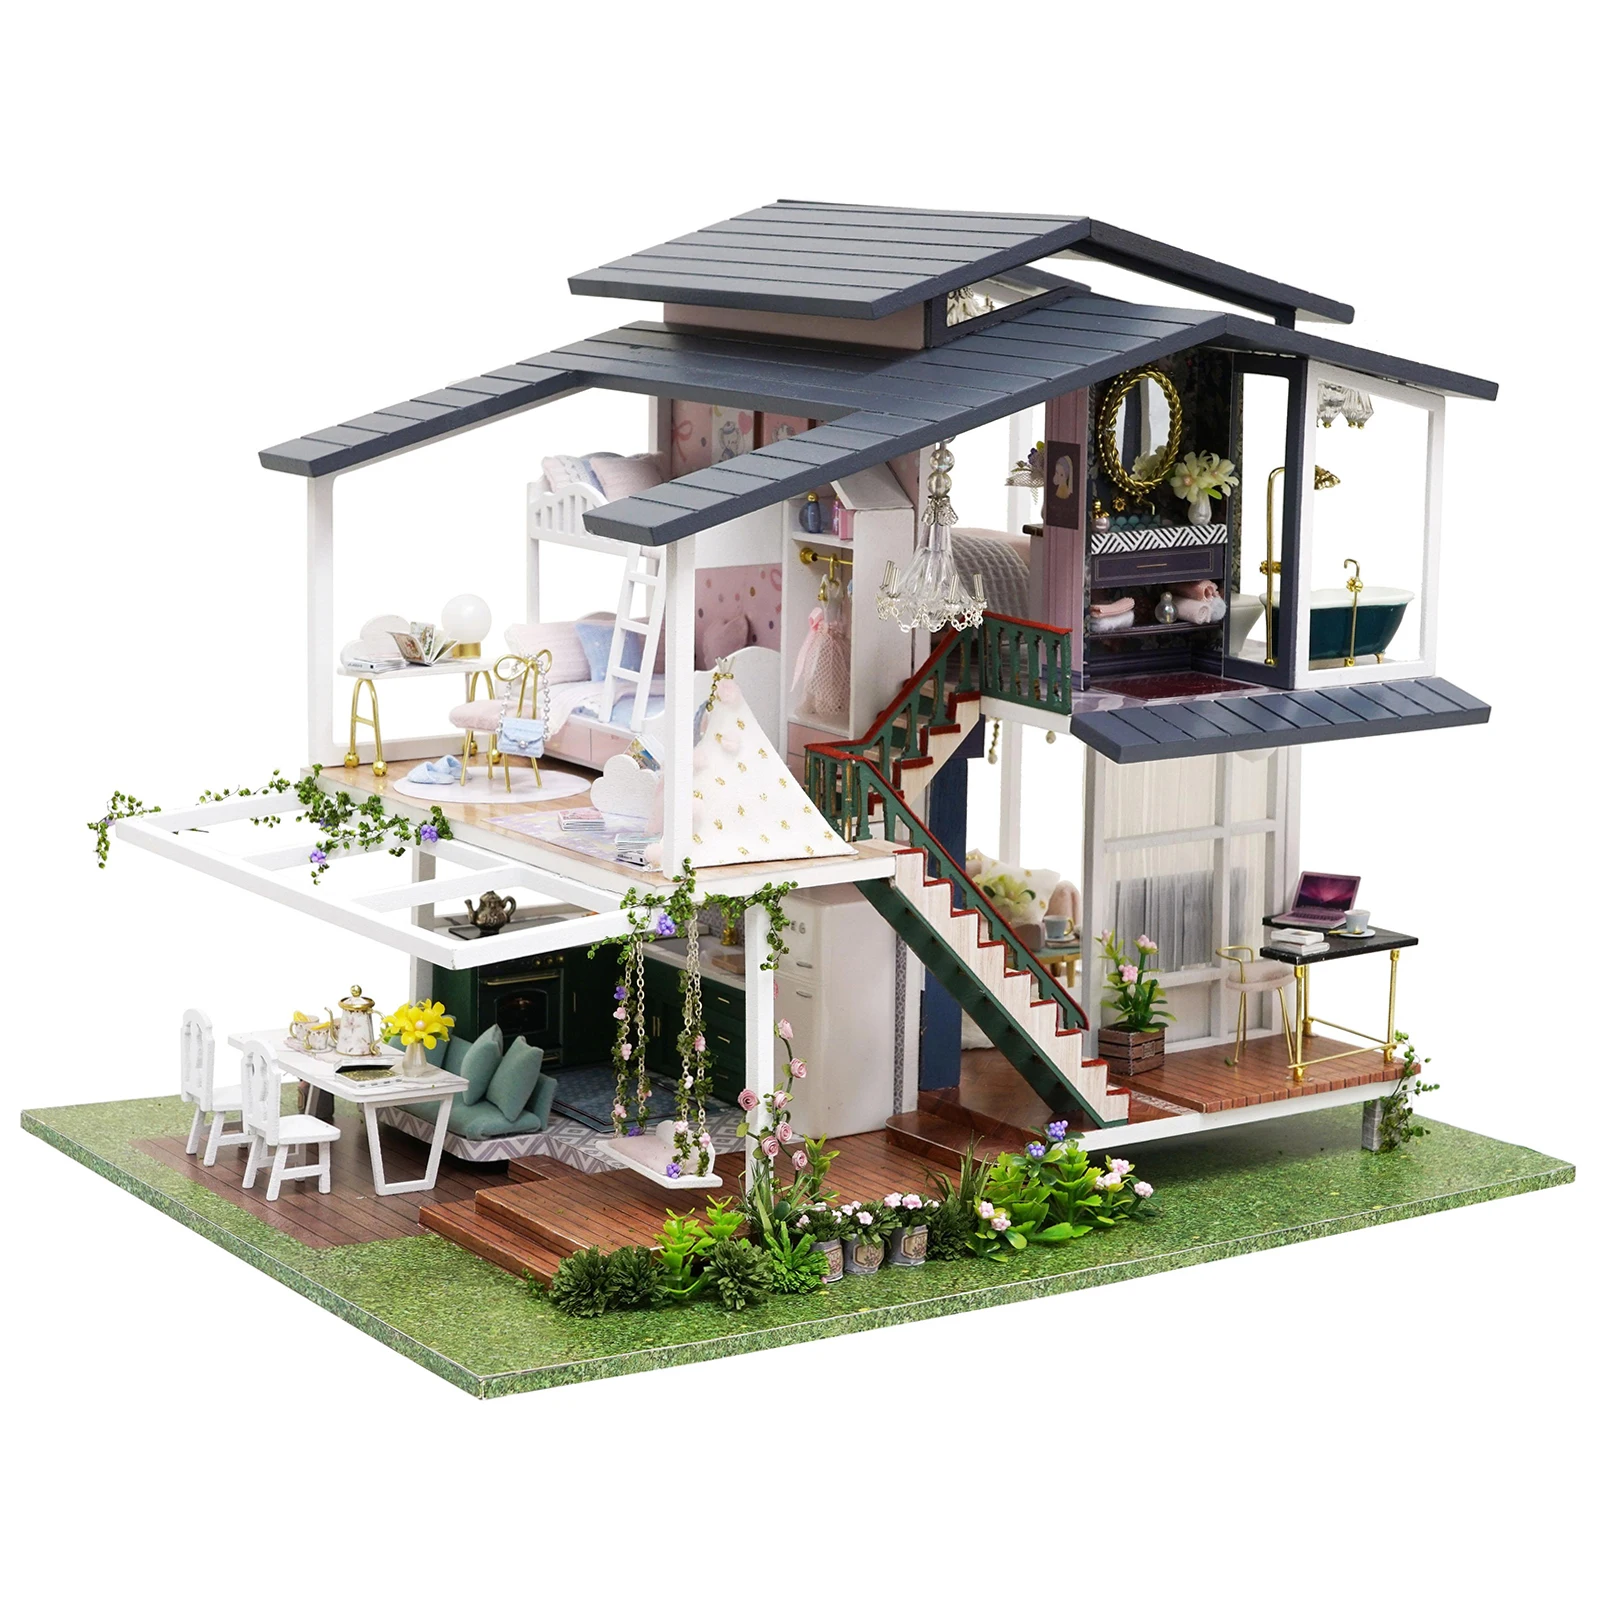 DIY Handcraft Miniature Creative Doll House Furniture Kits Mini Wood Romantic Modern Villa Cottage House LED Light Puzzle Toys